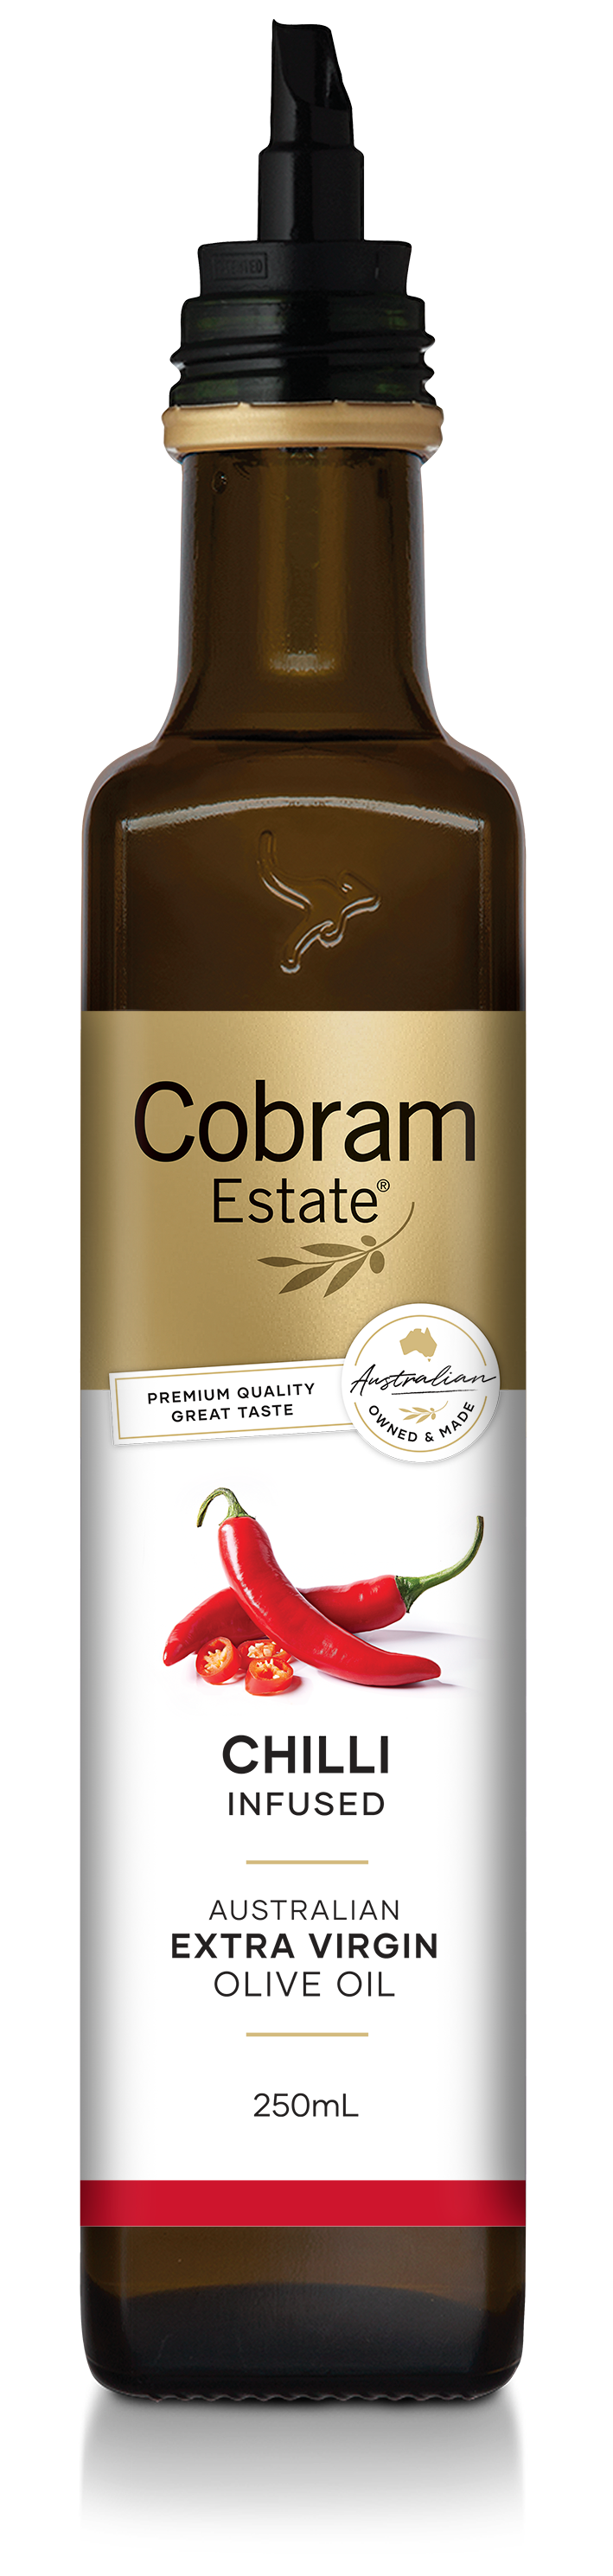 Smack of Intense Heat from Chilli Infused Oil | Australian Extra Virgin Olive Oil | Cobram Estate AU